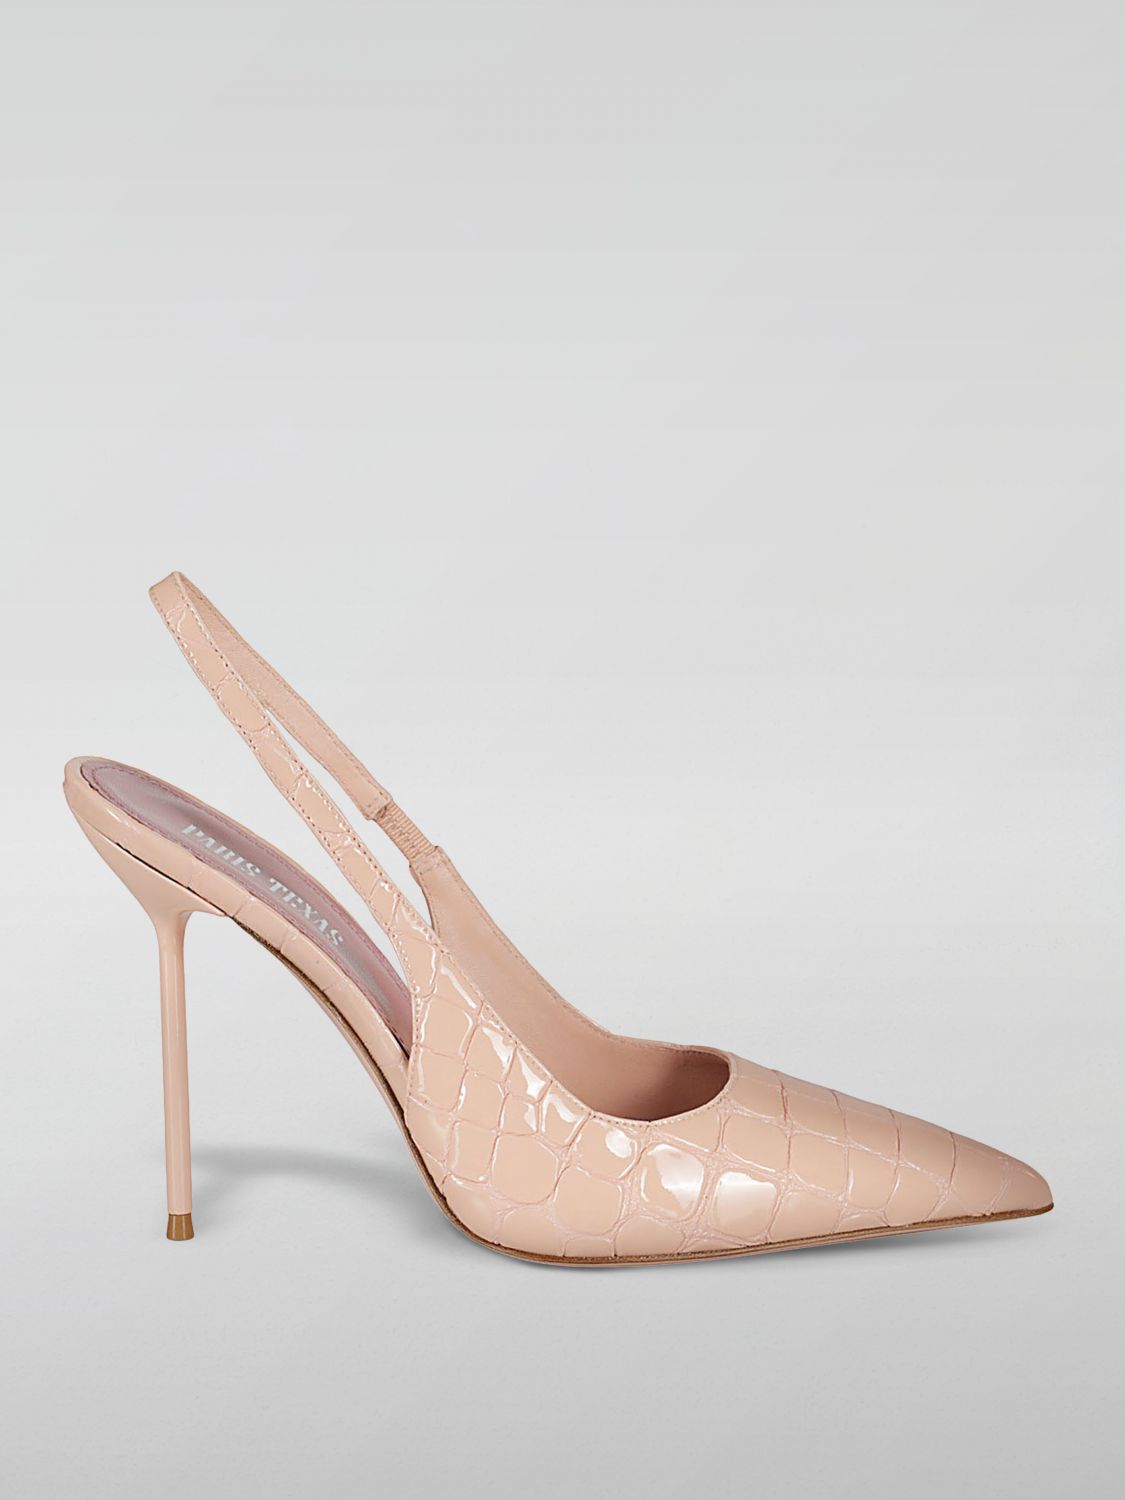 Paris Texas High Heel Shoes  Woman In Pink